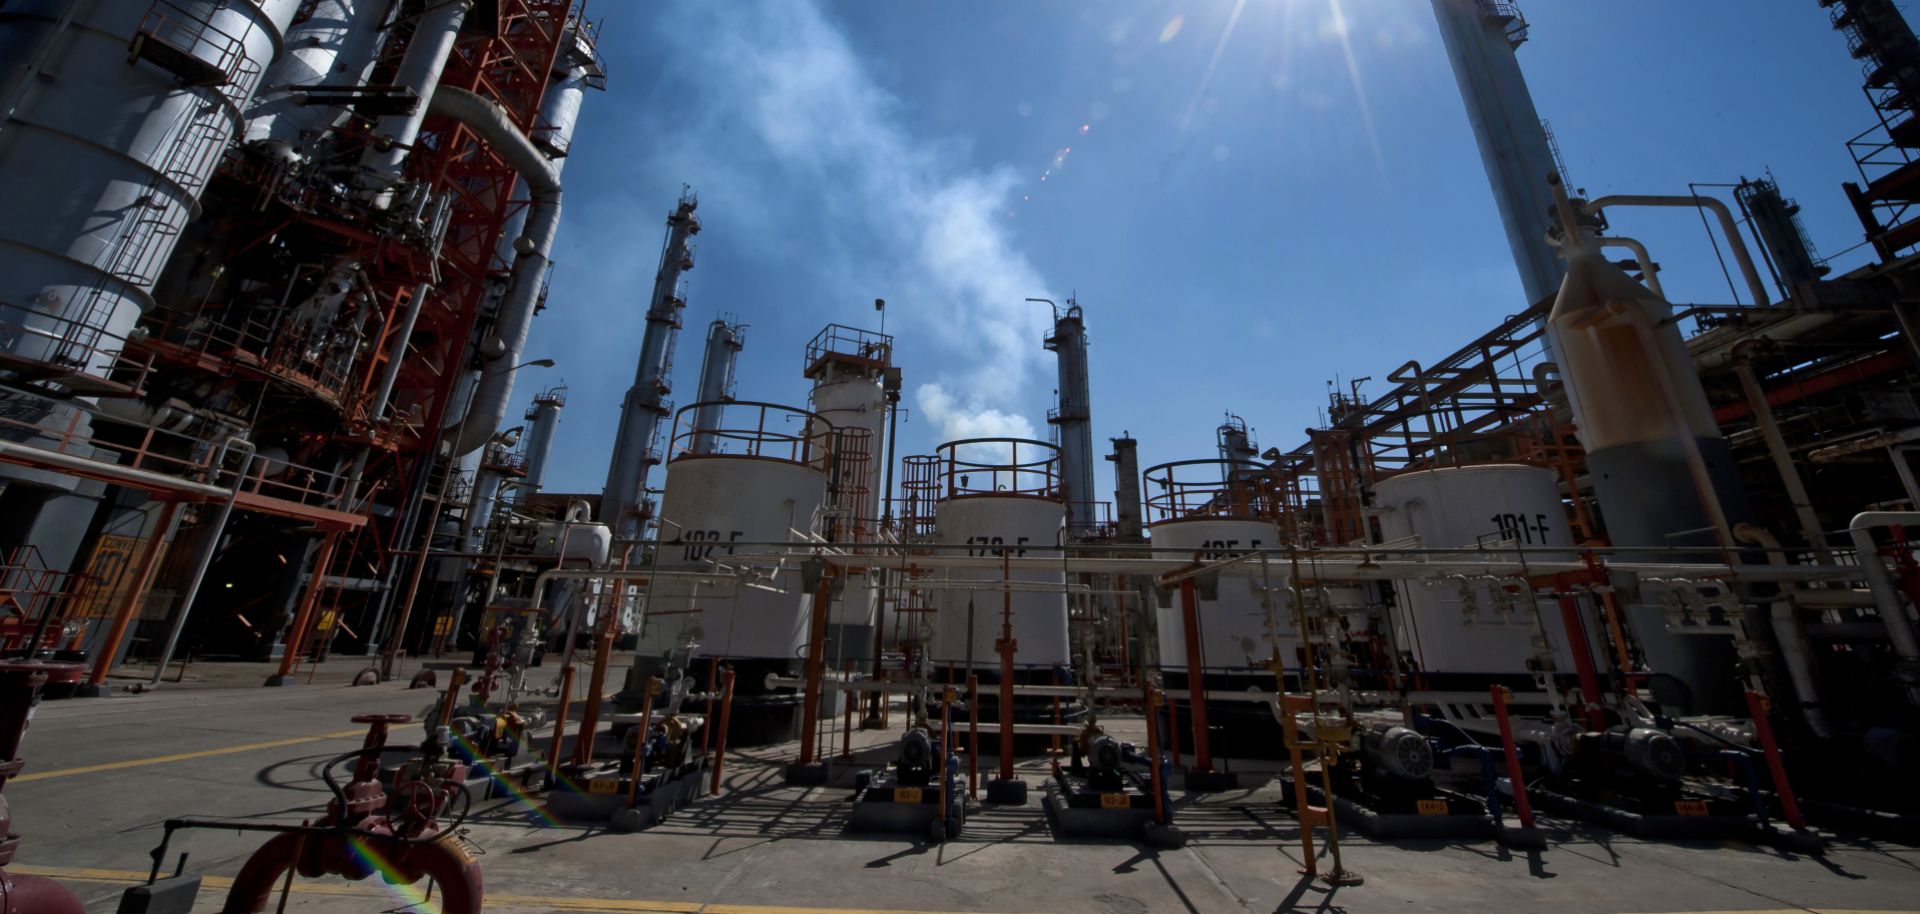 A Petroleos Mexicanos (Pemex) refinery processes petroleum in Tula, Mexico.